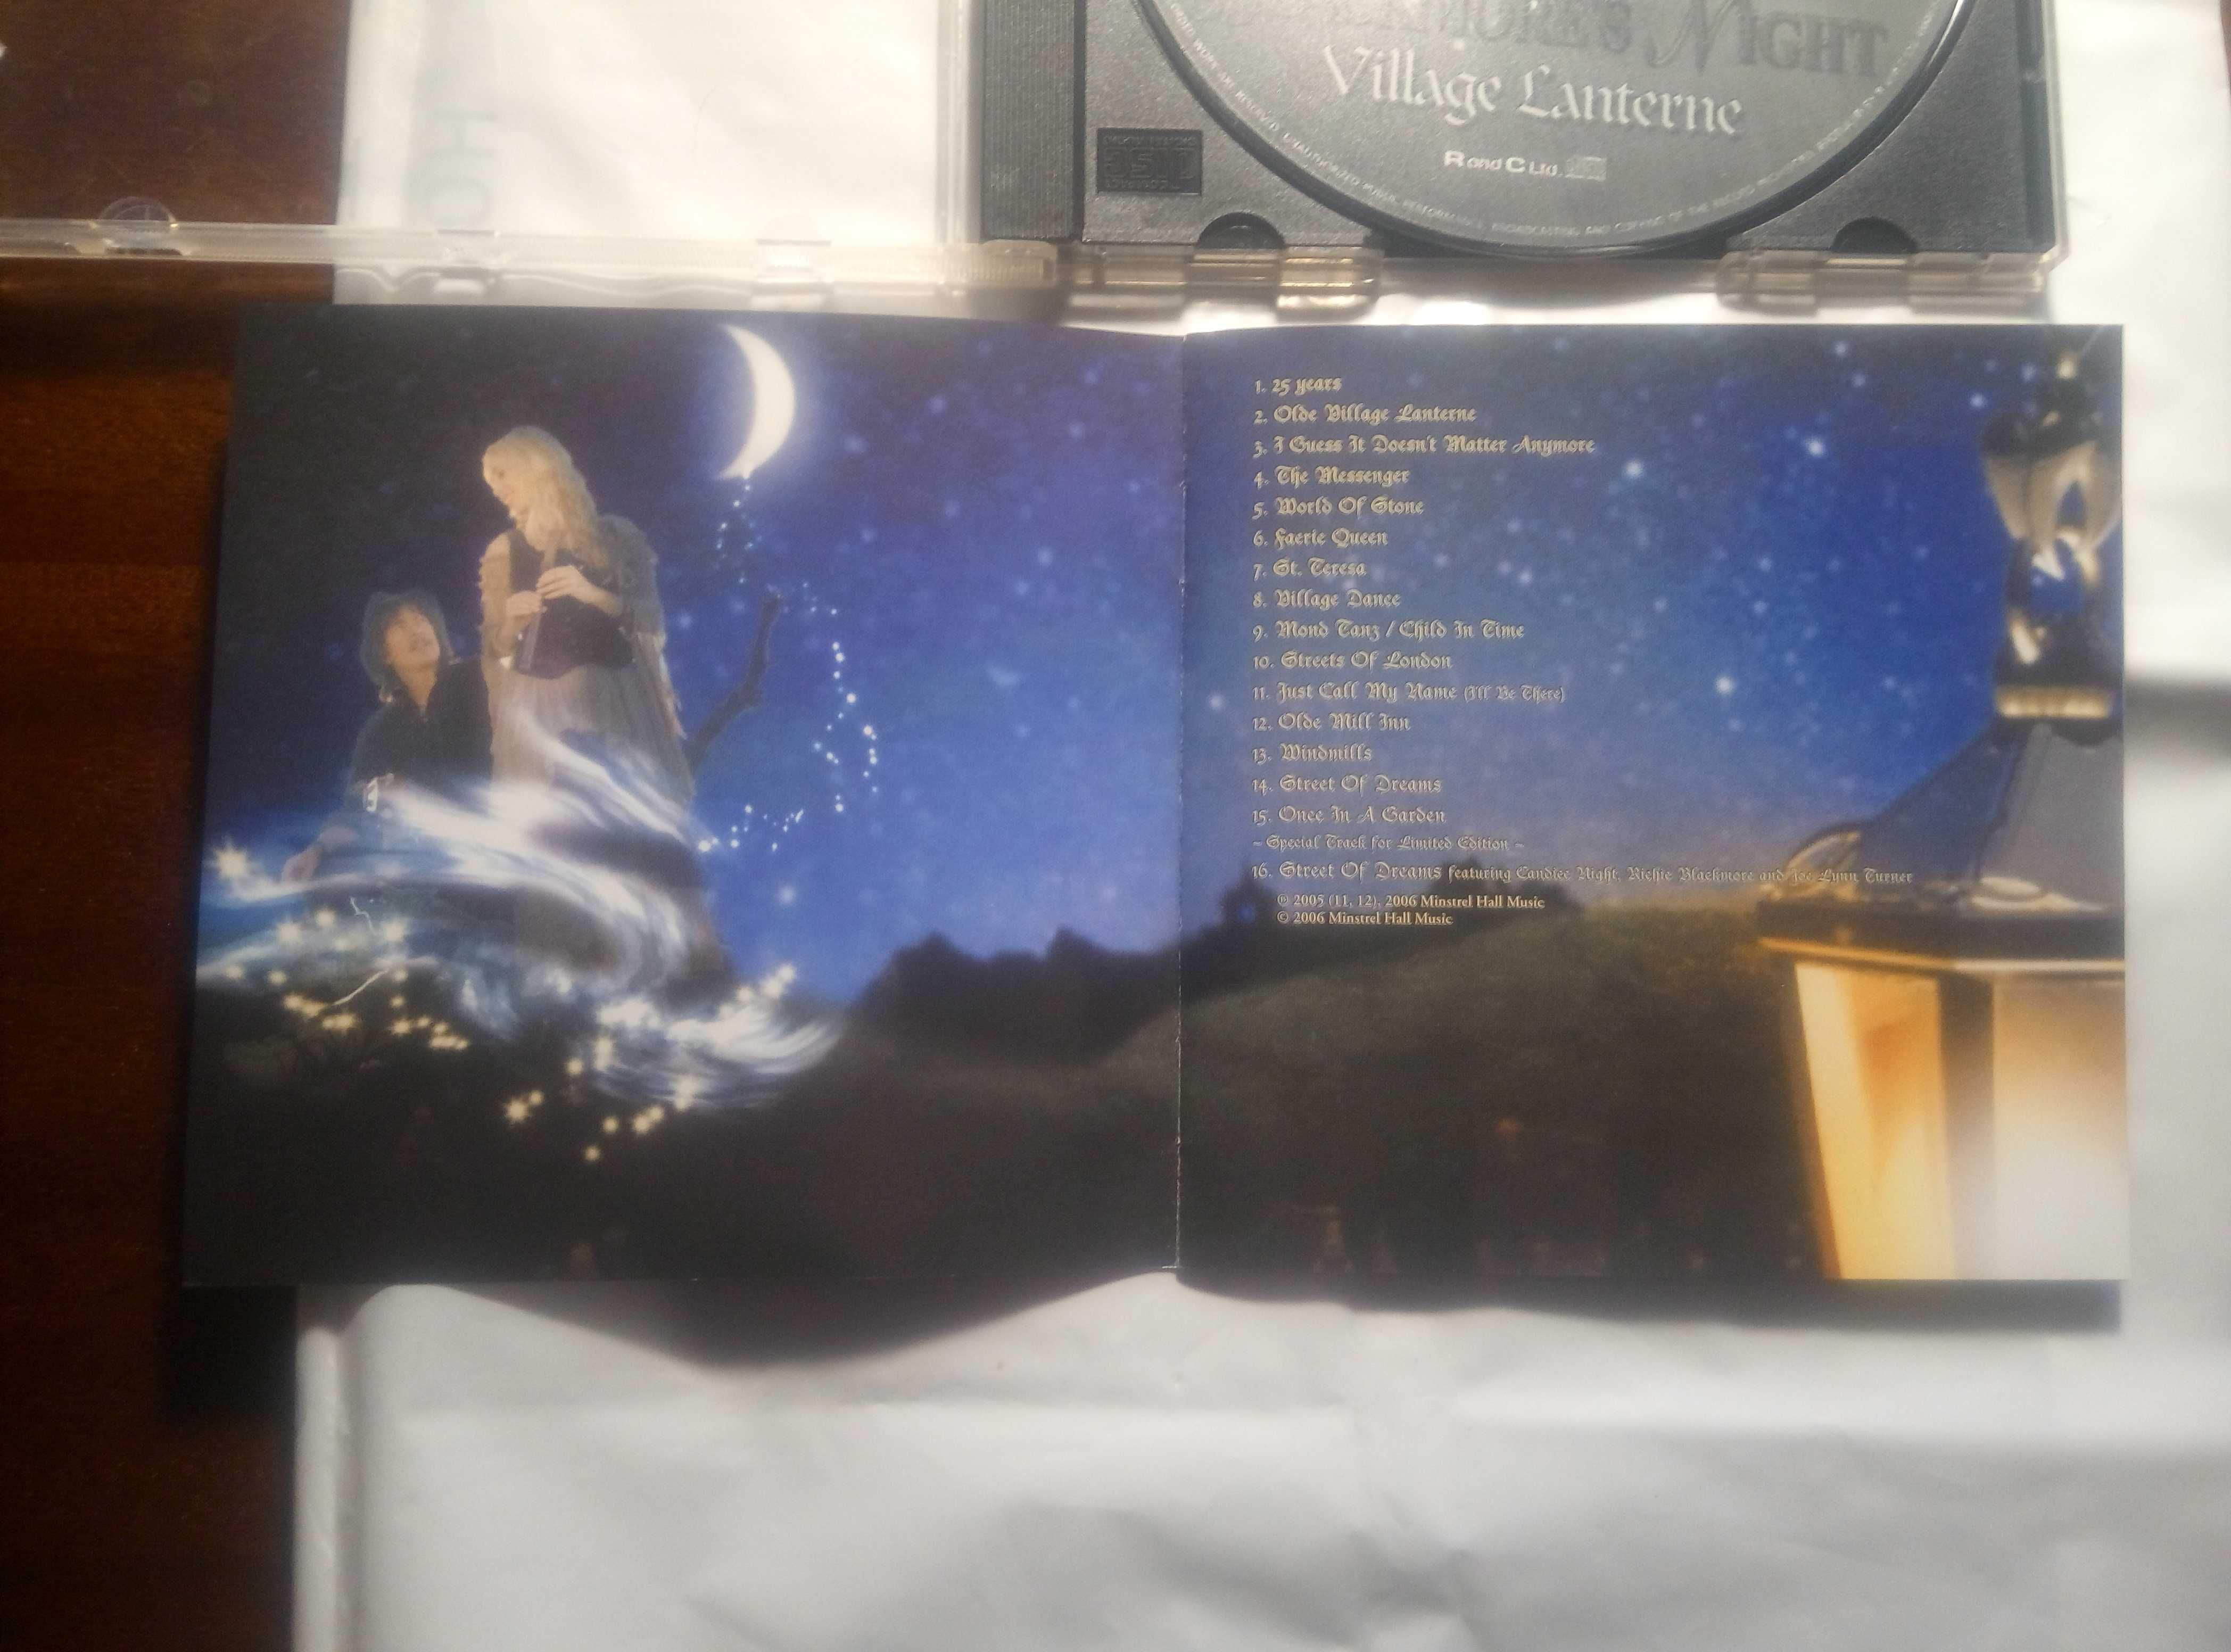 Blackmore's Night The Village Lanterne  CD фирменный диск